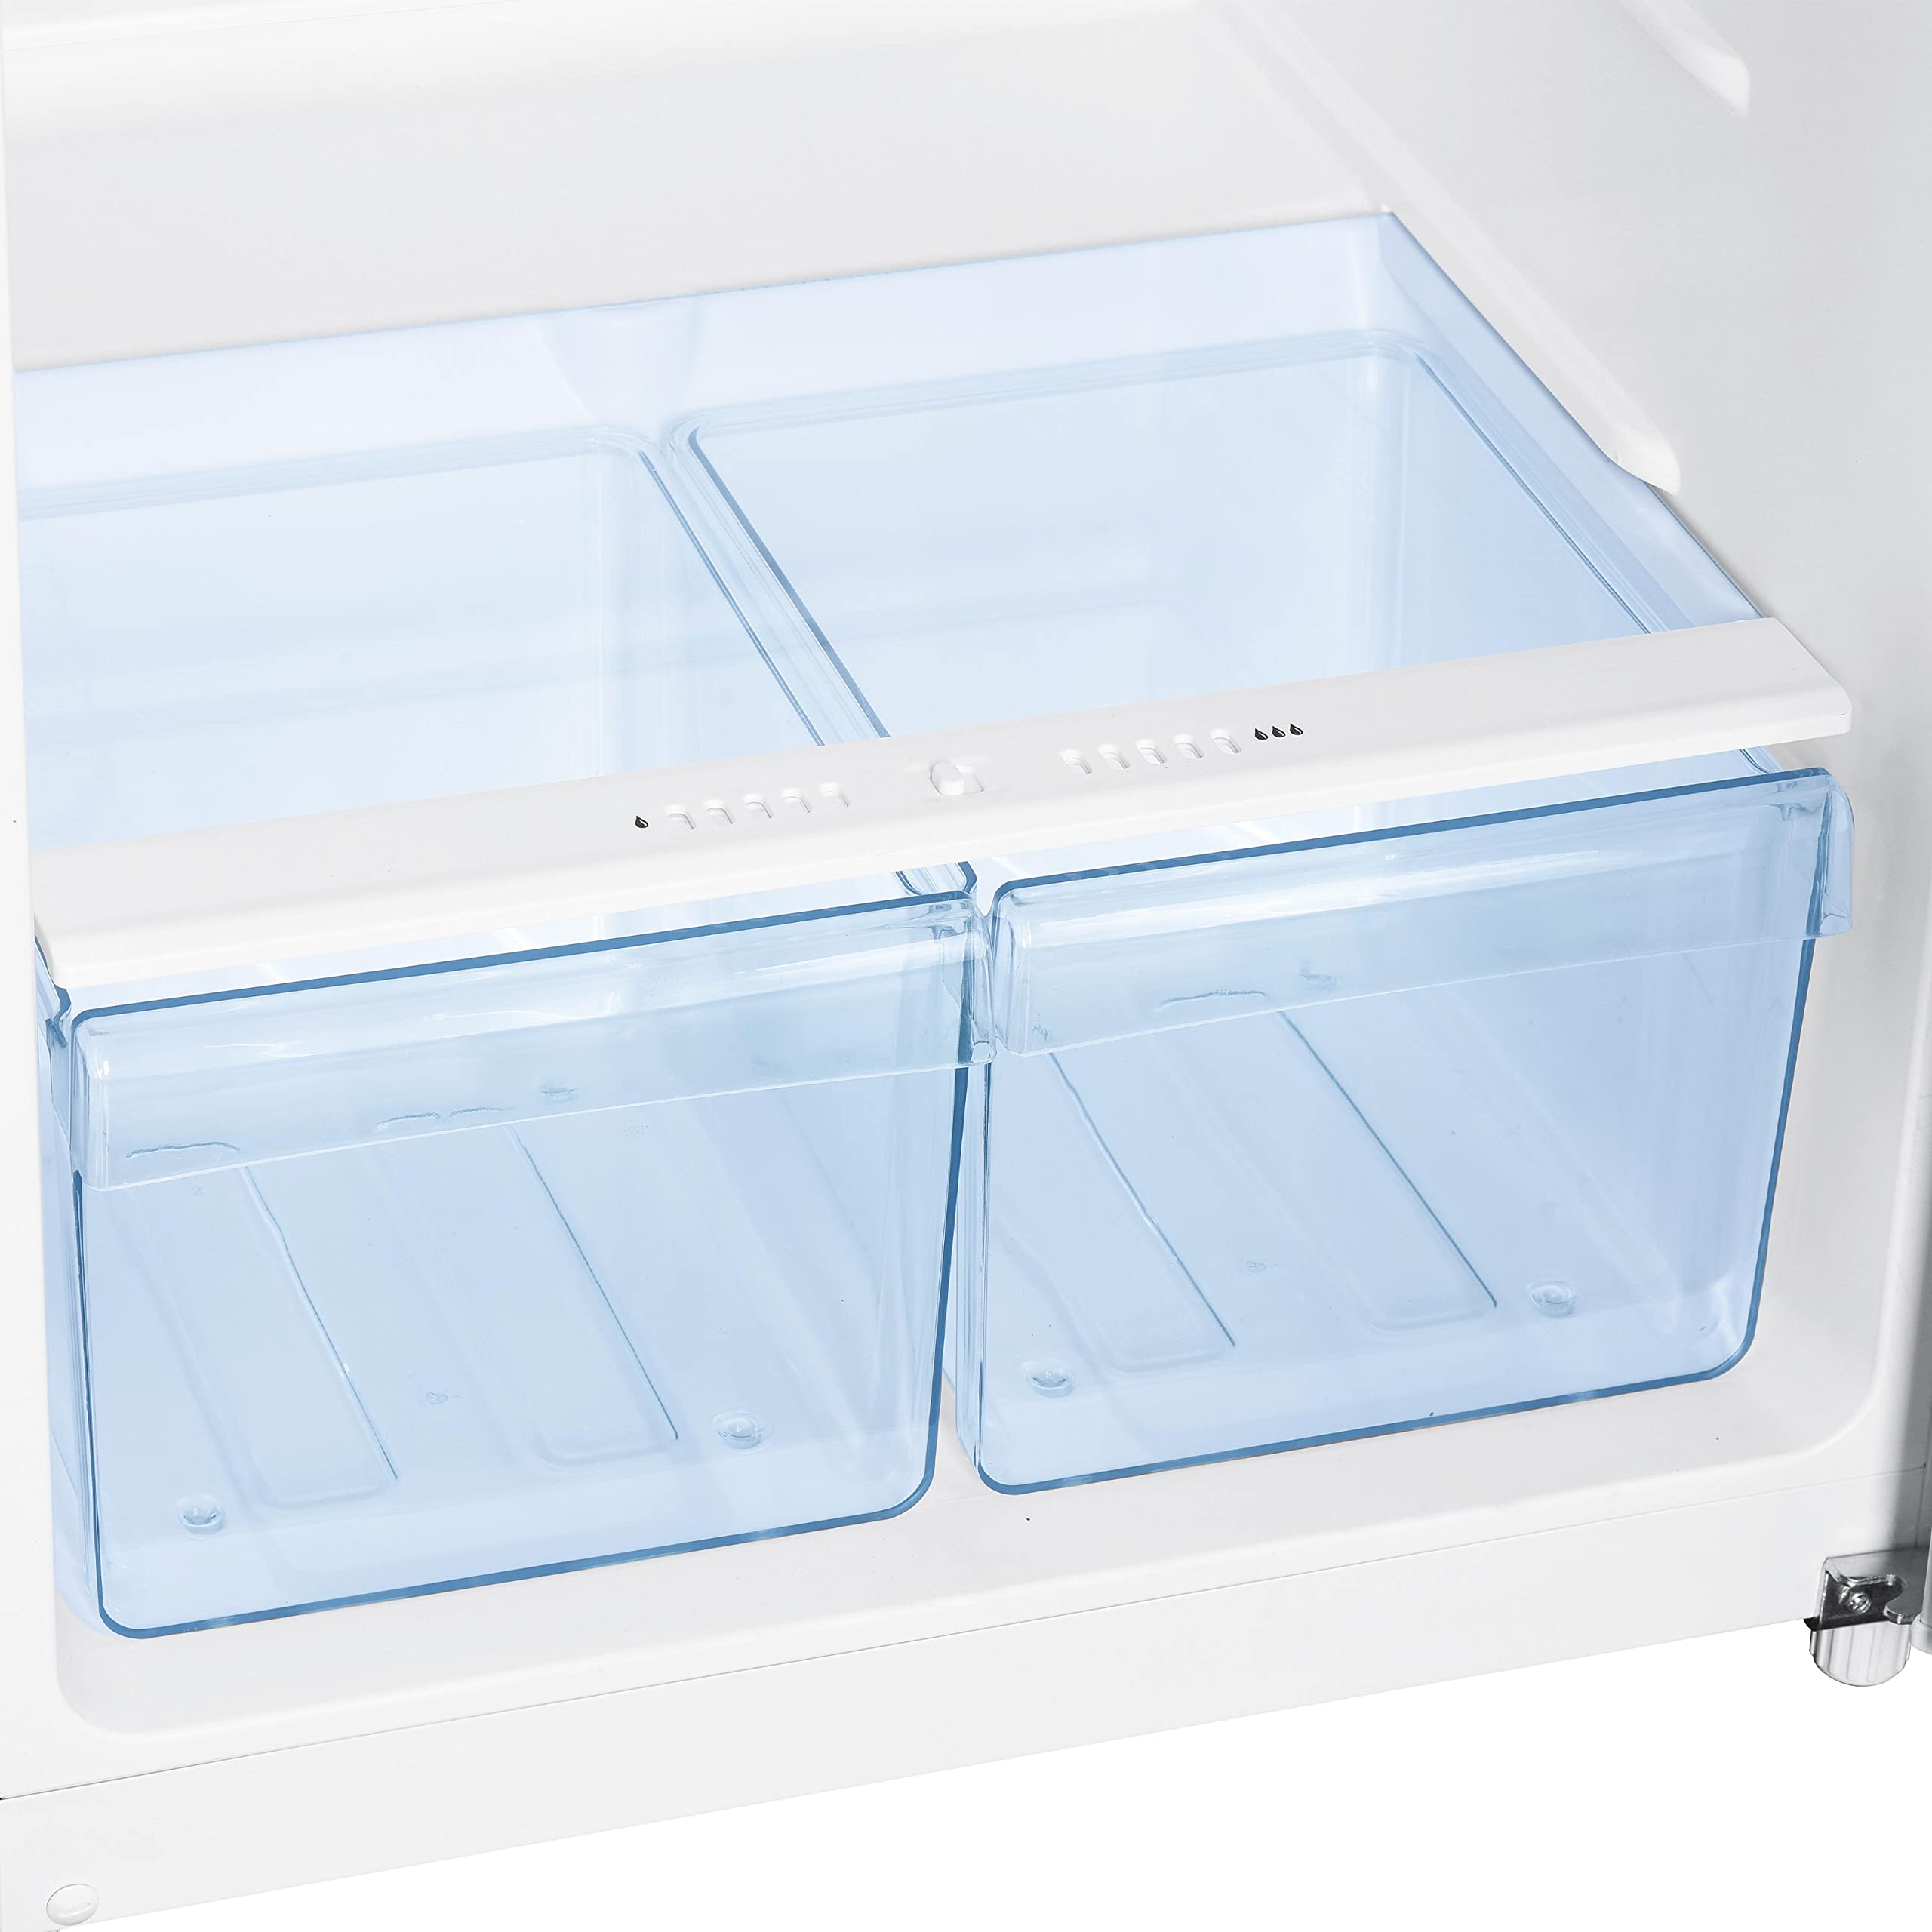 Magic Cool MCR10SI Apartment Refrigerator Freestanding Slim Design Full Fridge with Top Freezer for Condo, House, Small Kitchen Use, Metallic